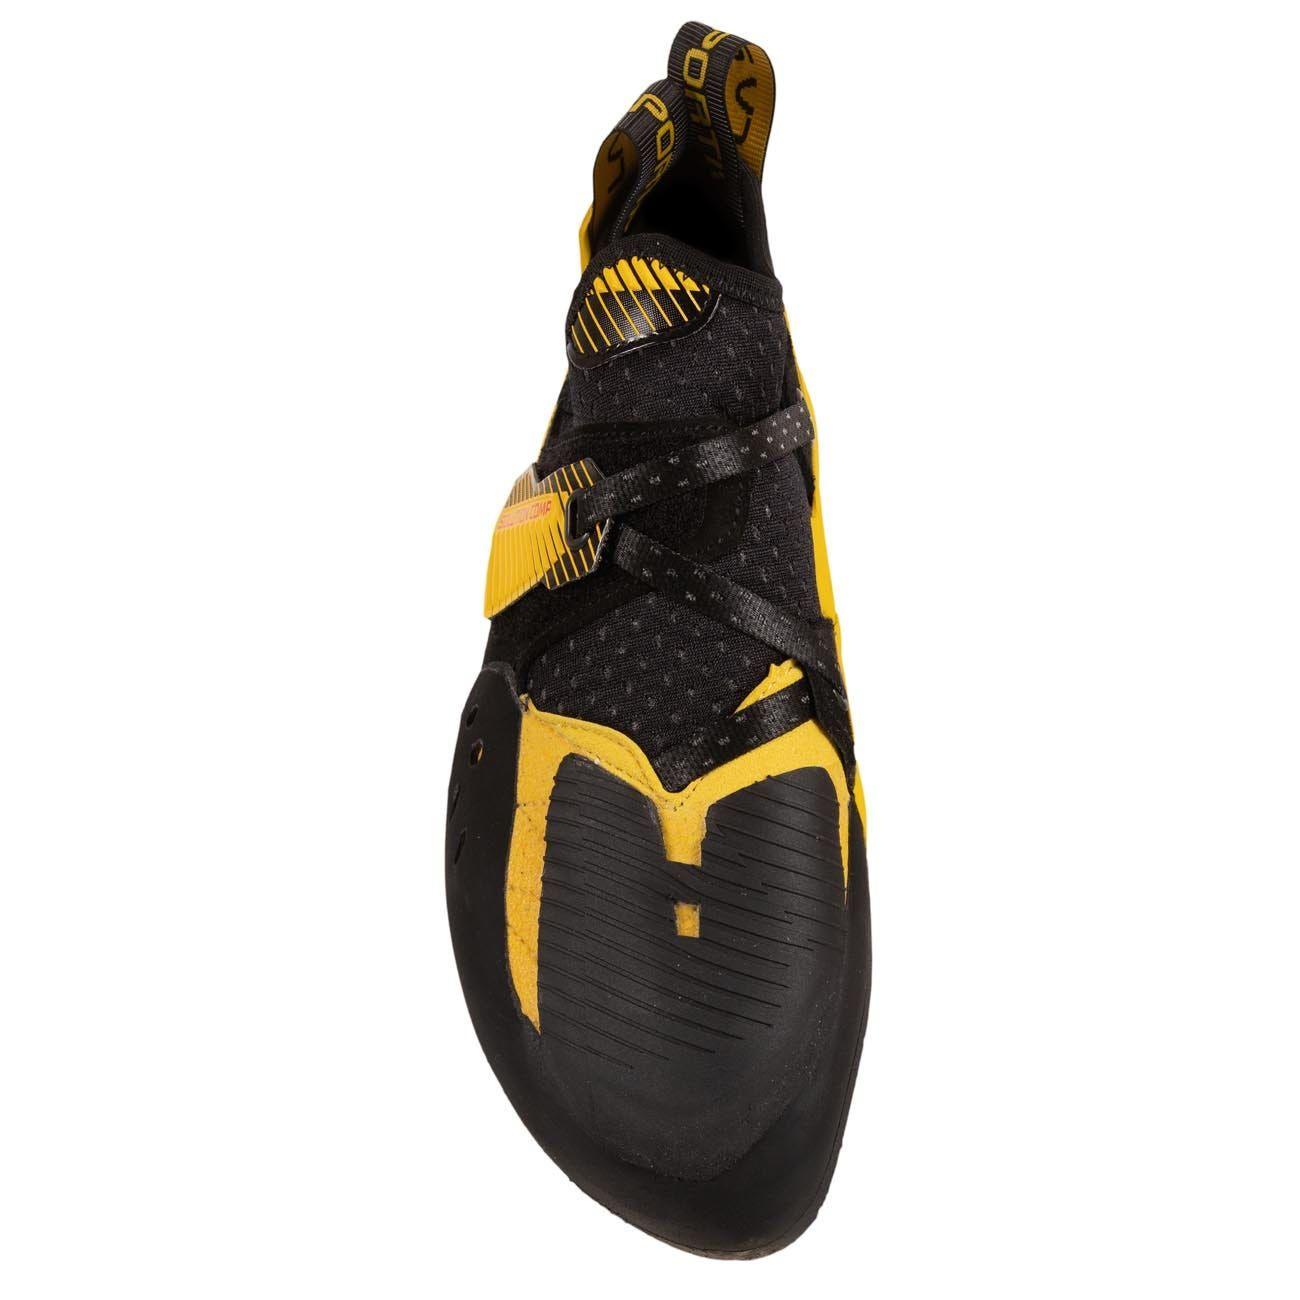 La Sportiva | Scarpe Solution Comp Black/Yellow - Fabbrica Ski Sises